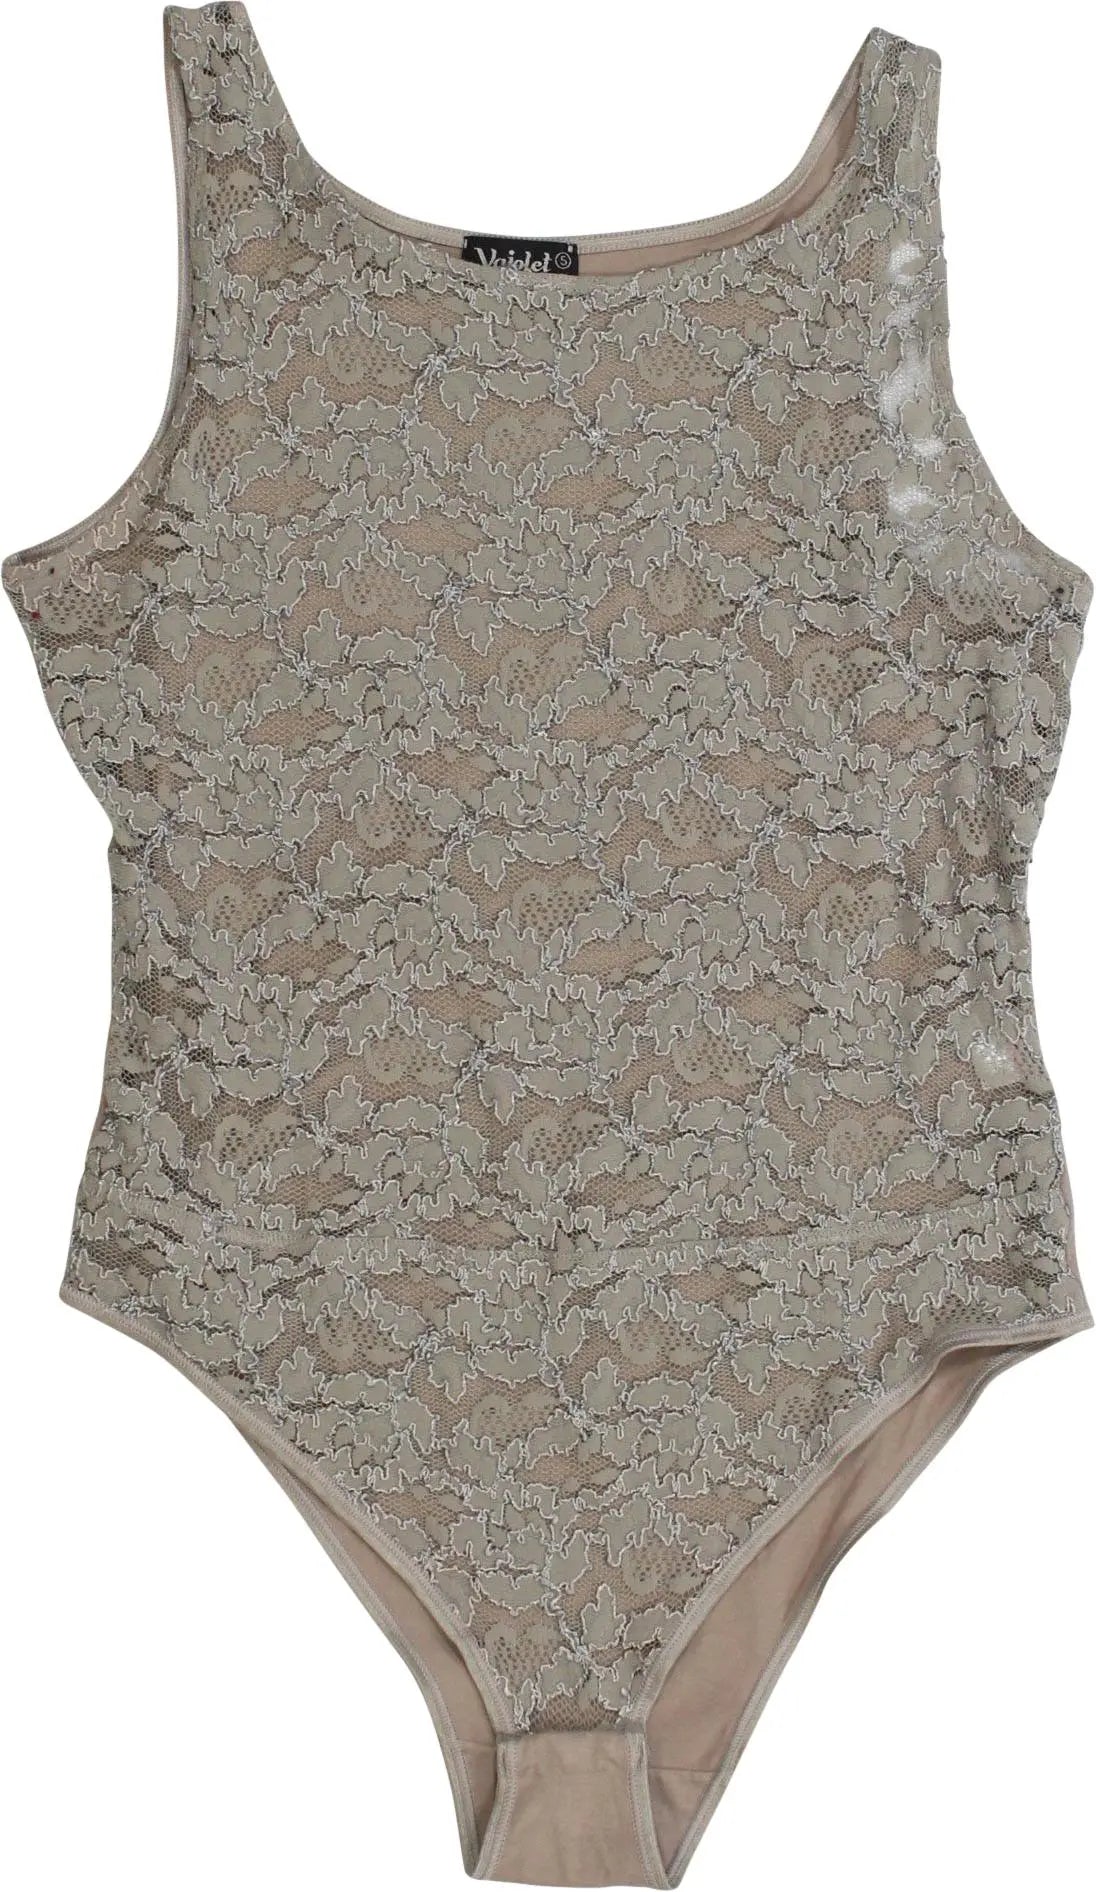 Vajolet - Lace Bodysuit- ThriftTale.com - Vintage and second handclothing